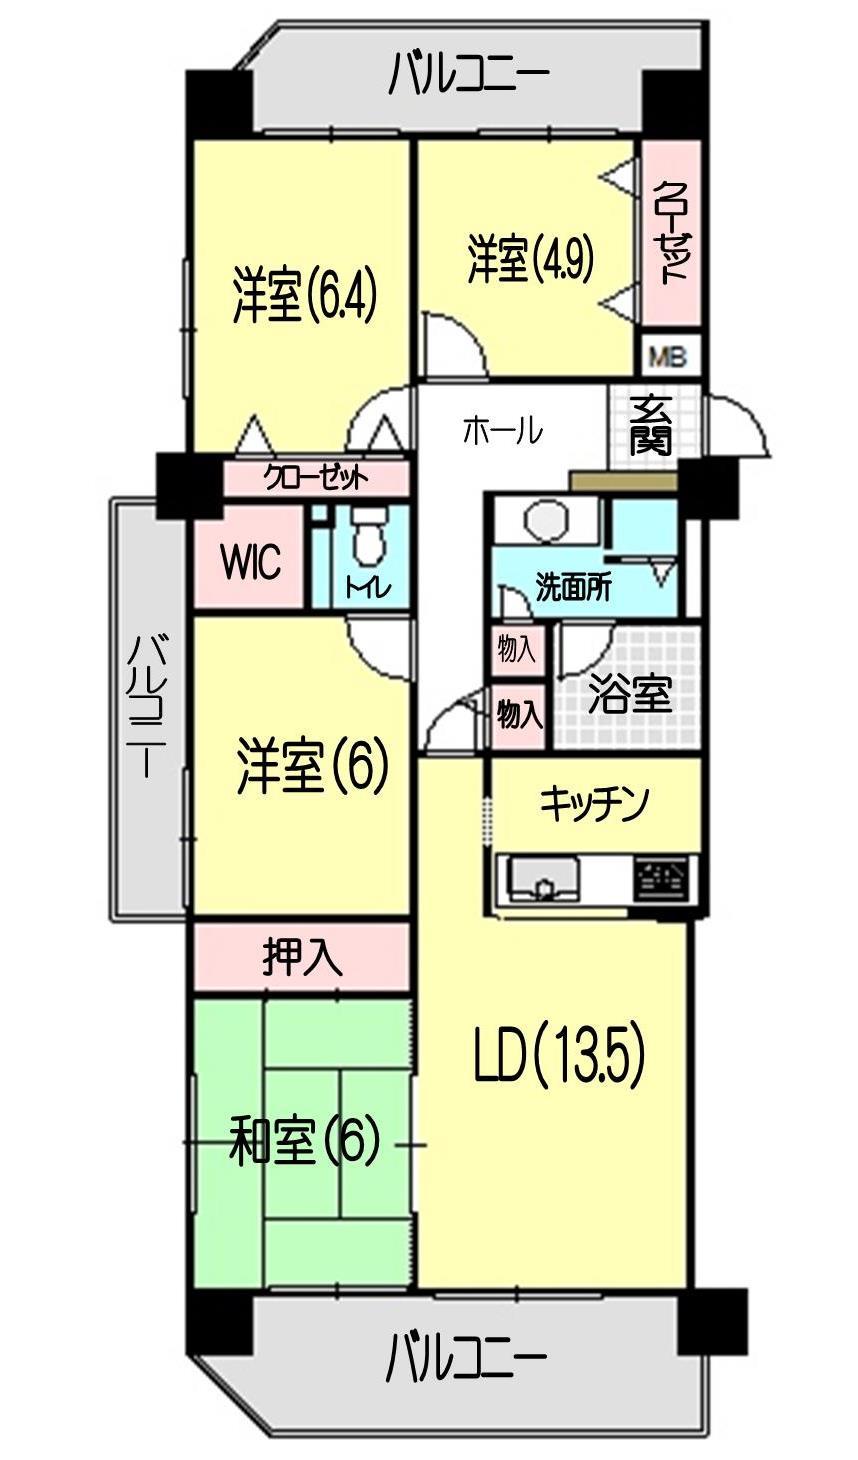 Floor plan. 4LDK + S (storeroom), Price 14.8 million yen, Footprint 84.9 sq m , Balcony area 21.23 sq m